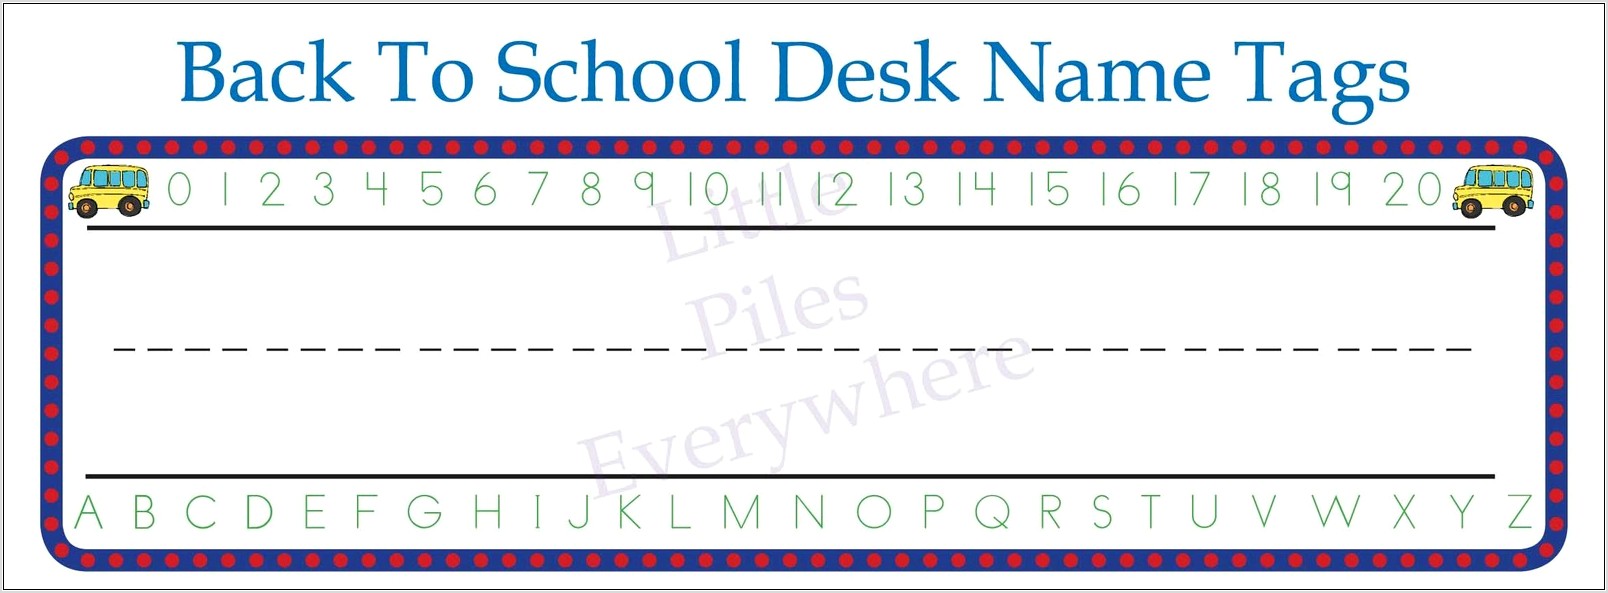 printable-school-name-tags-for-desks-worksheet-restiumani-resume-7xob5aaly3